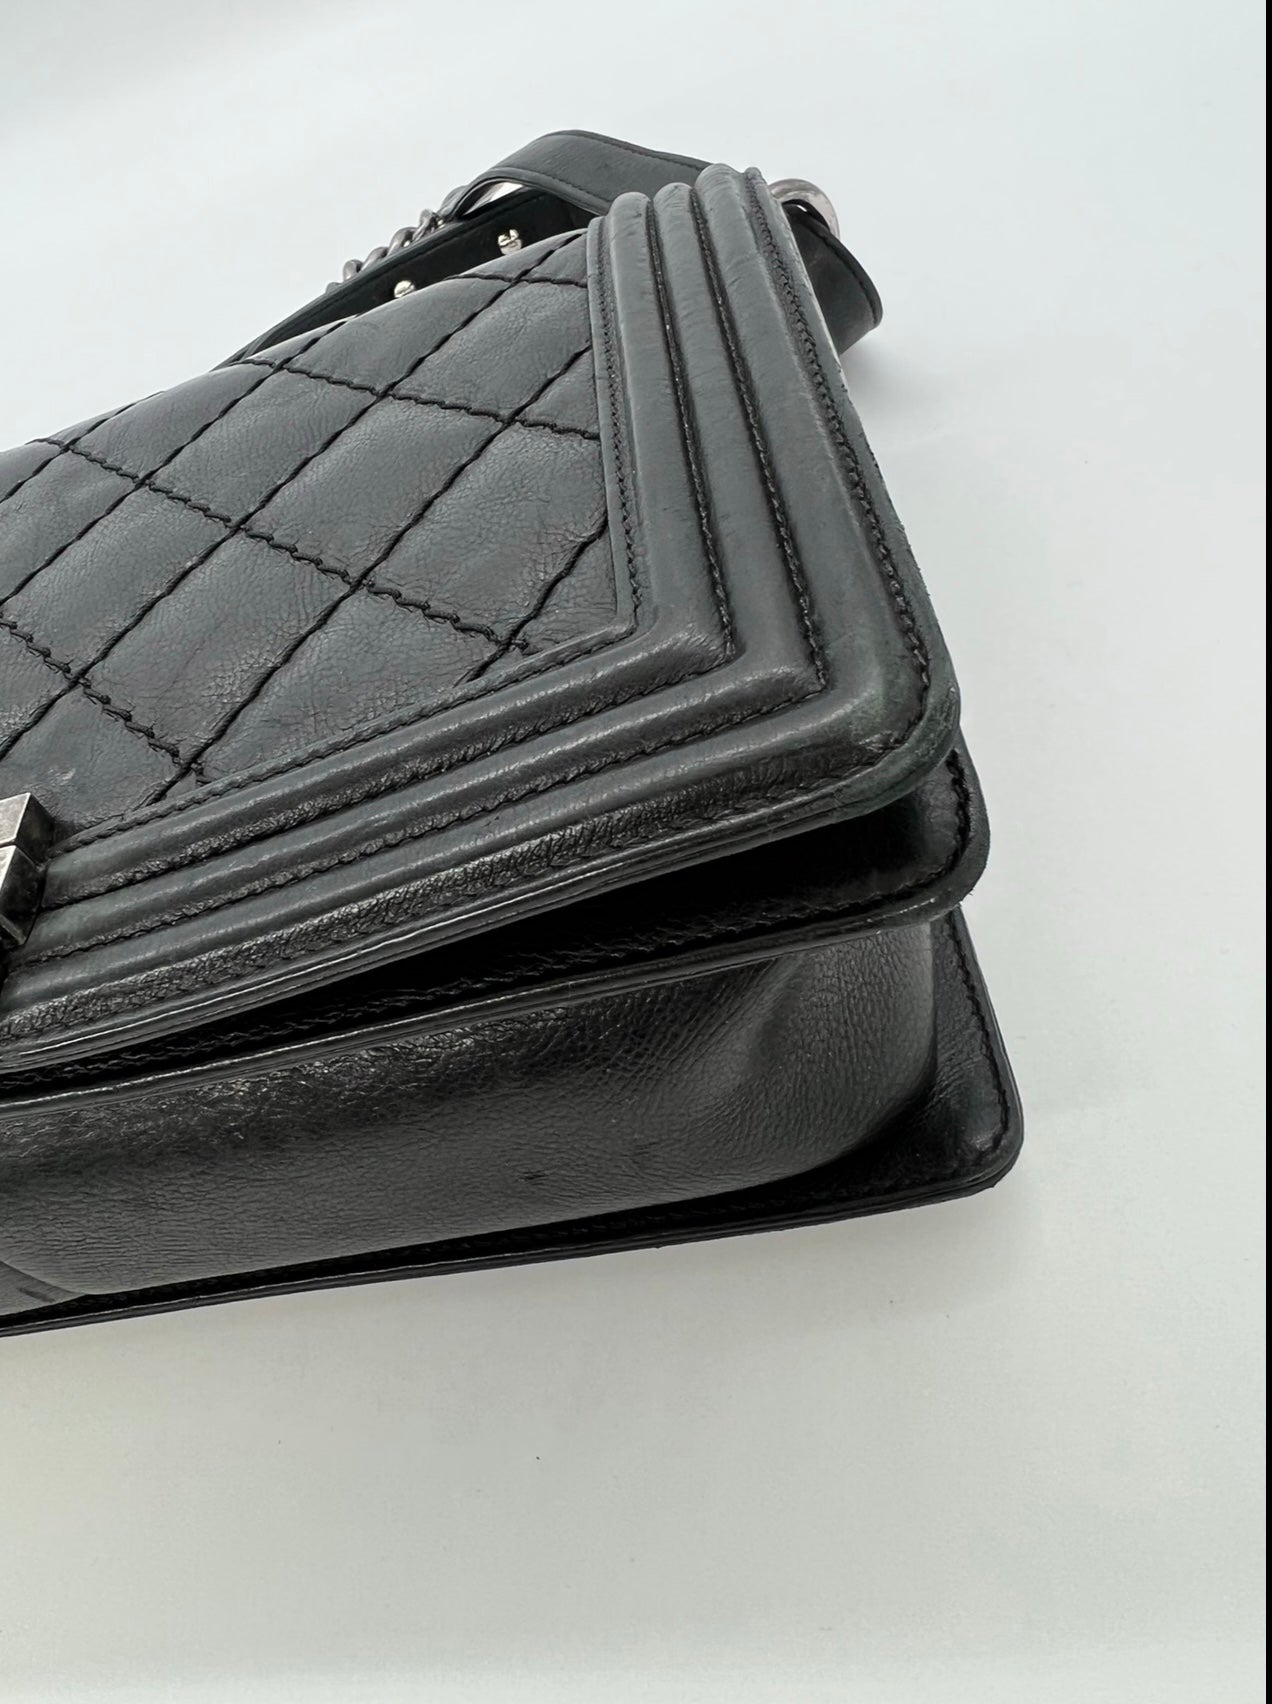 Chanel Boy Bag Large Black Lambskin SHW - SOLD